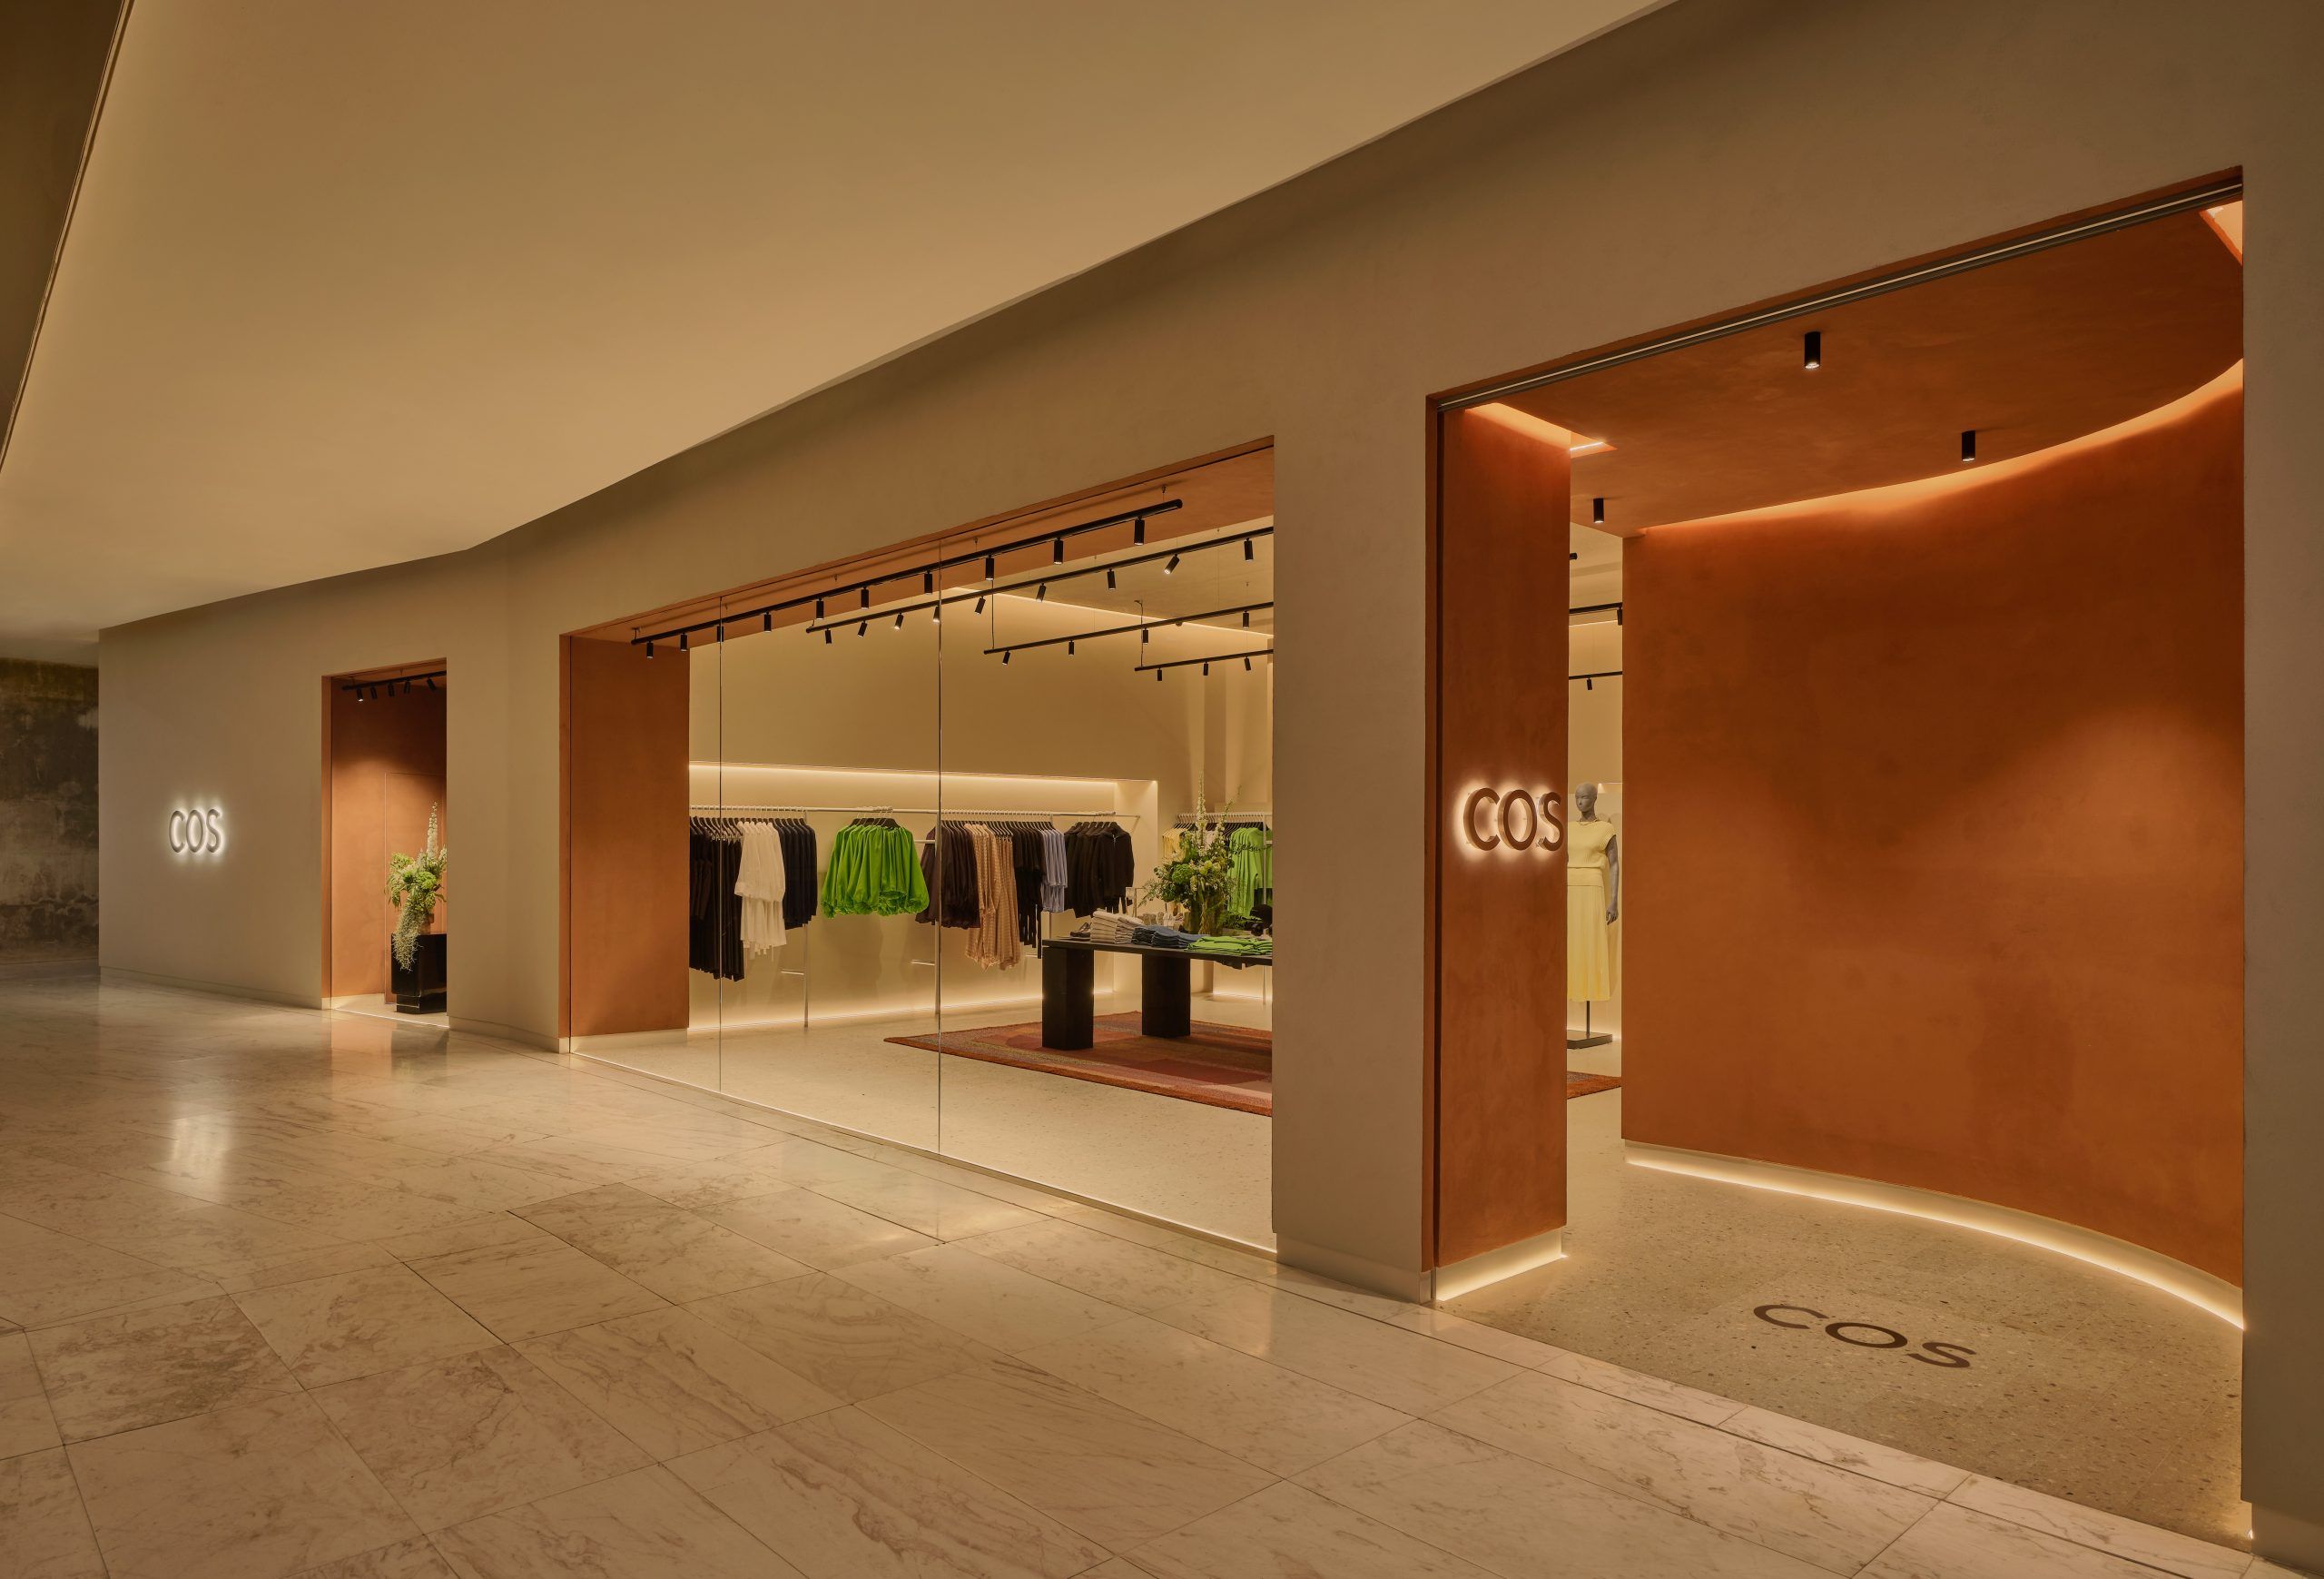 COS unveils new concept store in EmQuartier, focusing on sustainability